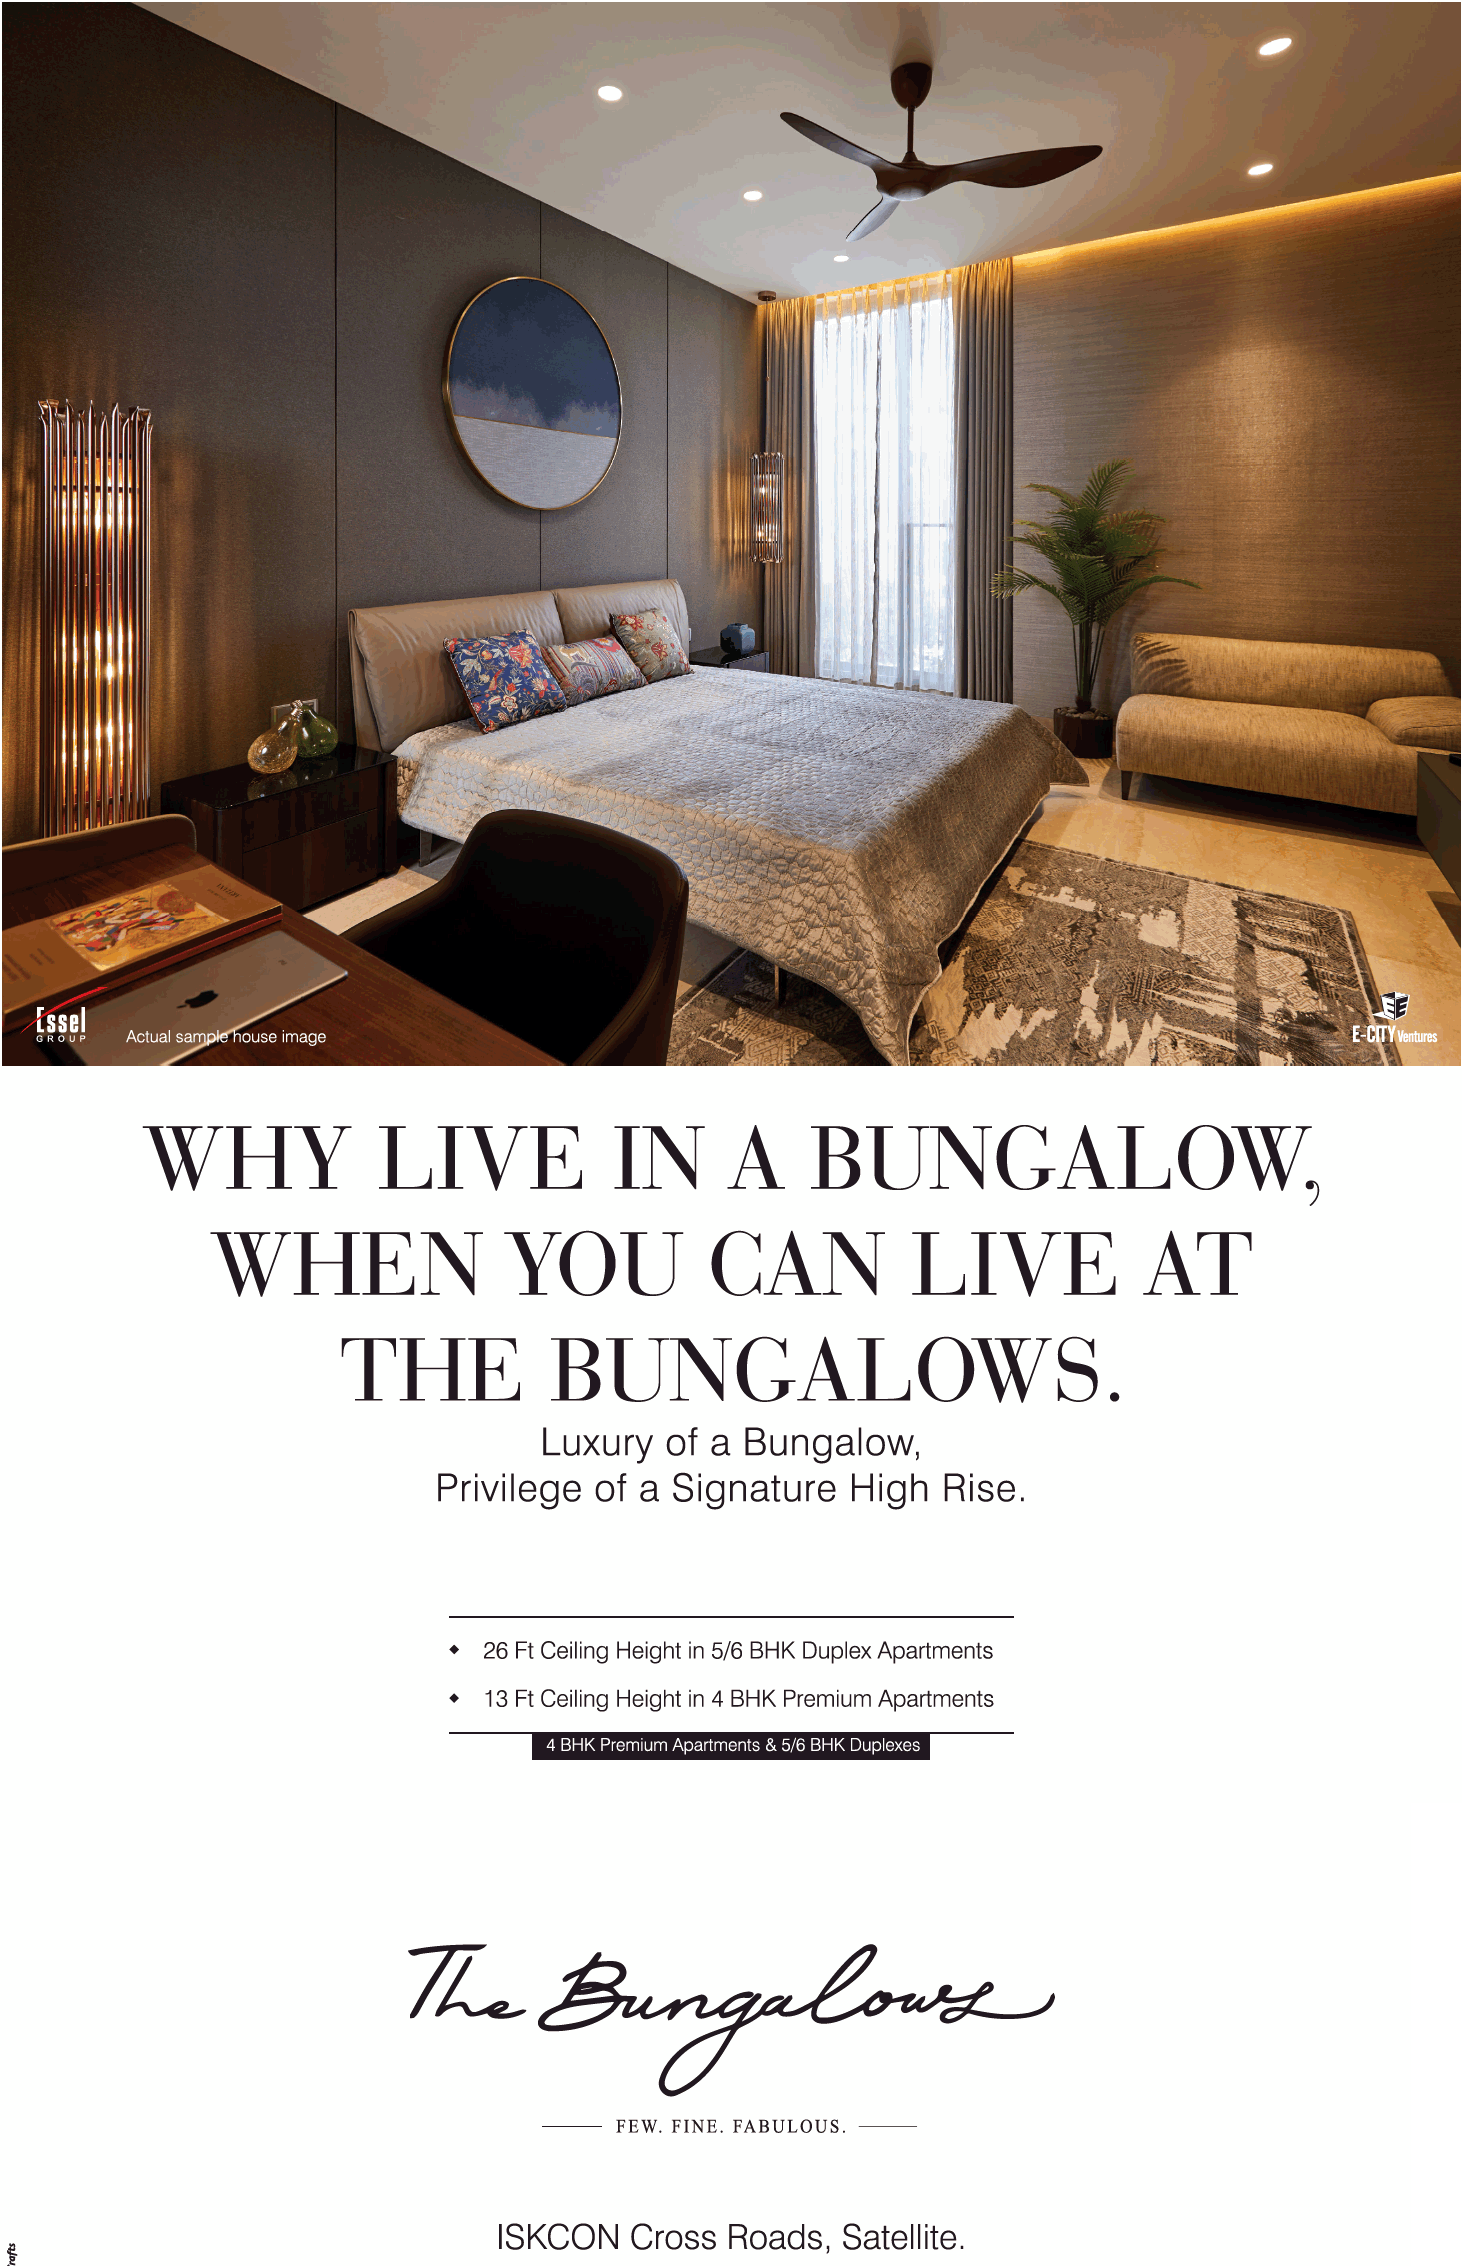 4 BHK premium apartments at The Bungalows in Ahmedabad